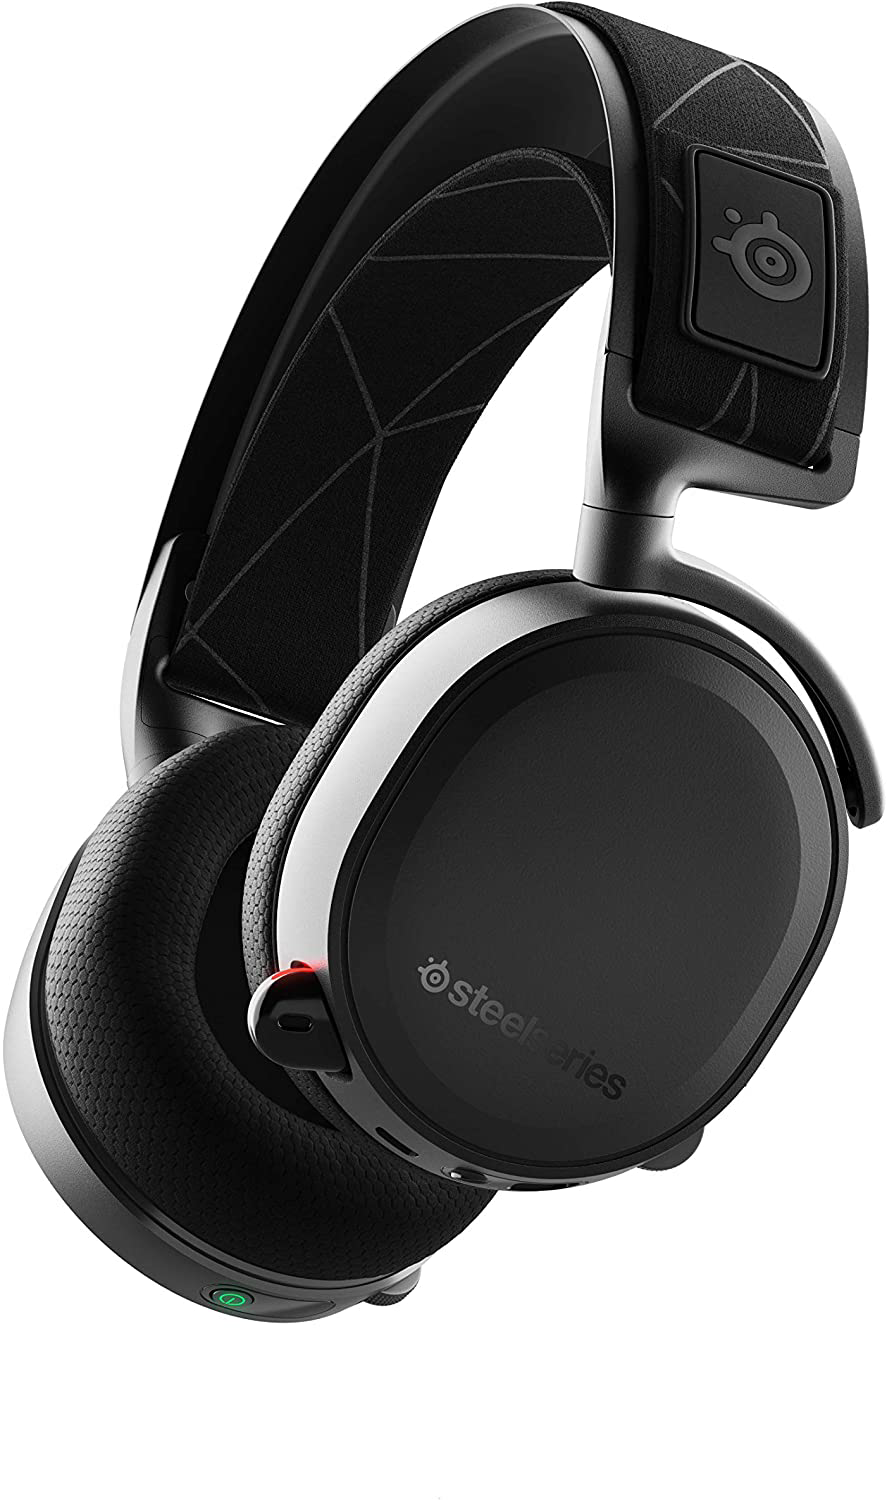 SteelSeries Arctis 7 Wireless Gaming Headset (Black) $125